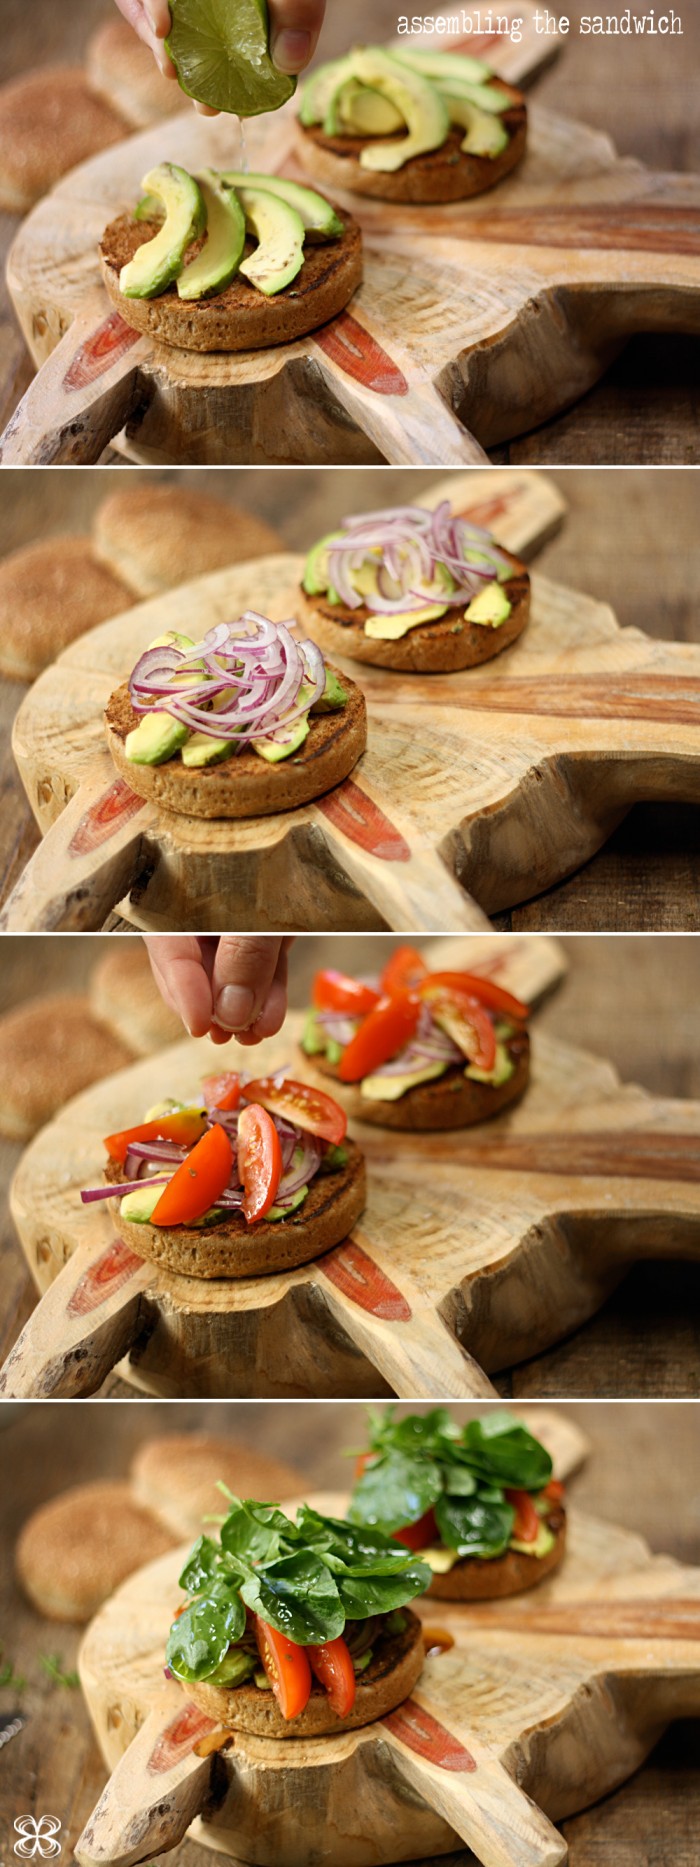 assembling-the-sandwich--sweetpotato-vegan-burguer-(leticia-massula-for-cozinha-da-matilde)